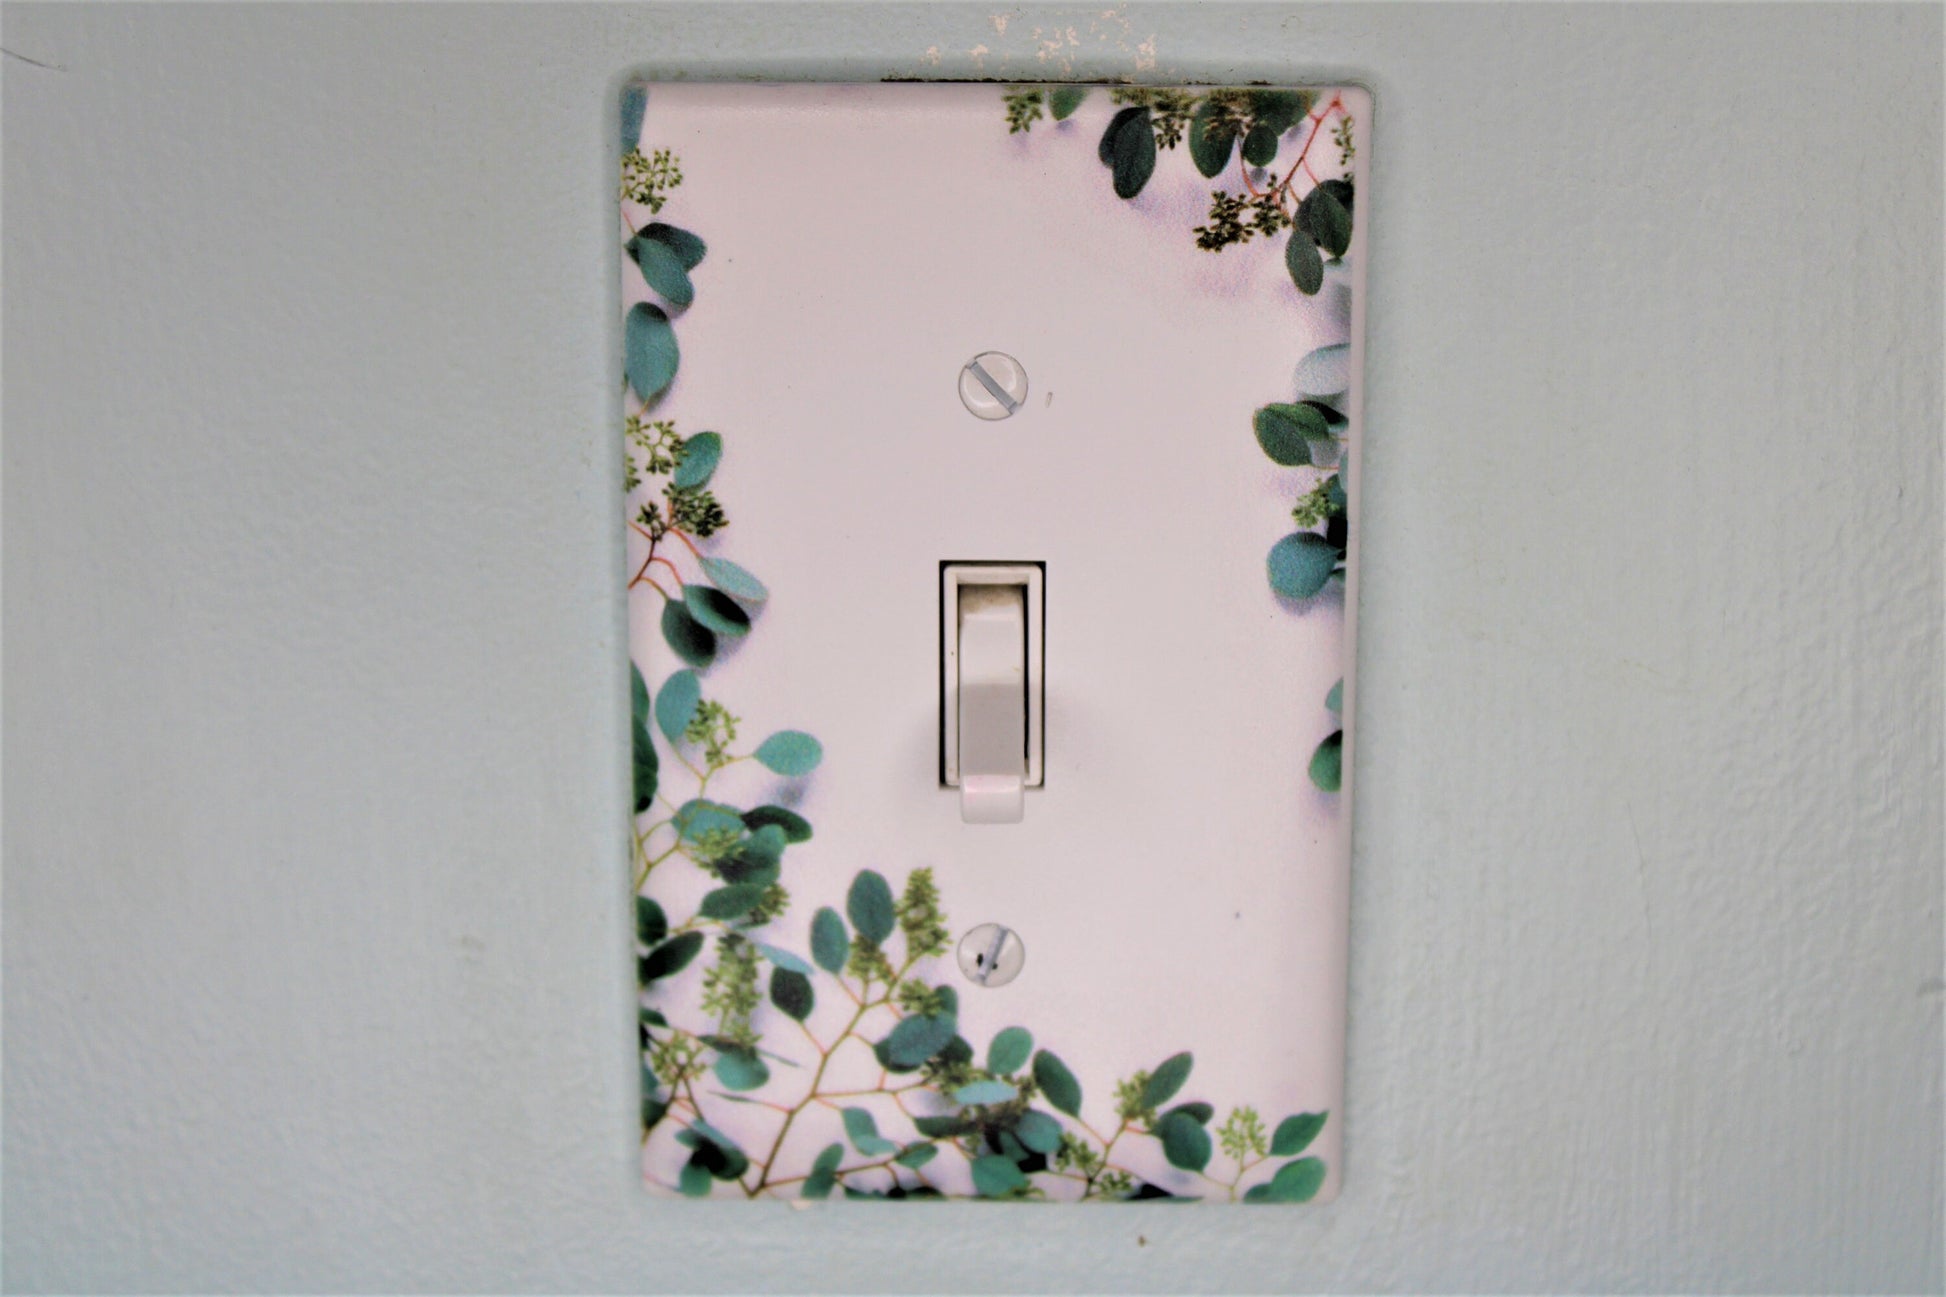 vining houseplants greenery eucalyptus plants light switch plate cover printed durable green decor unique custom piece